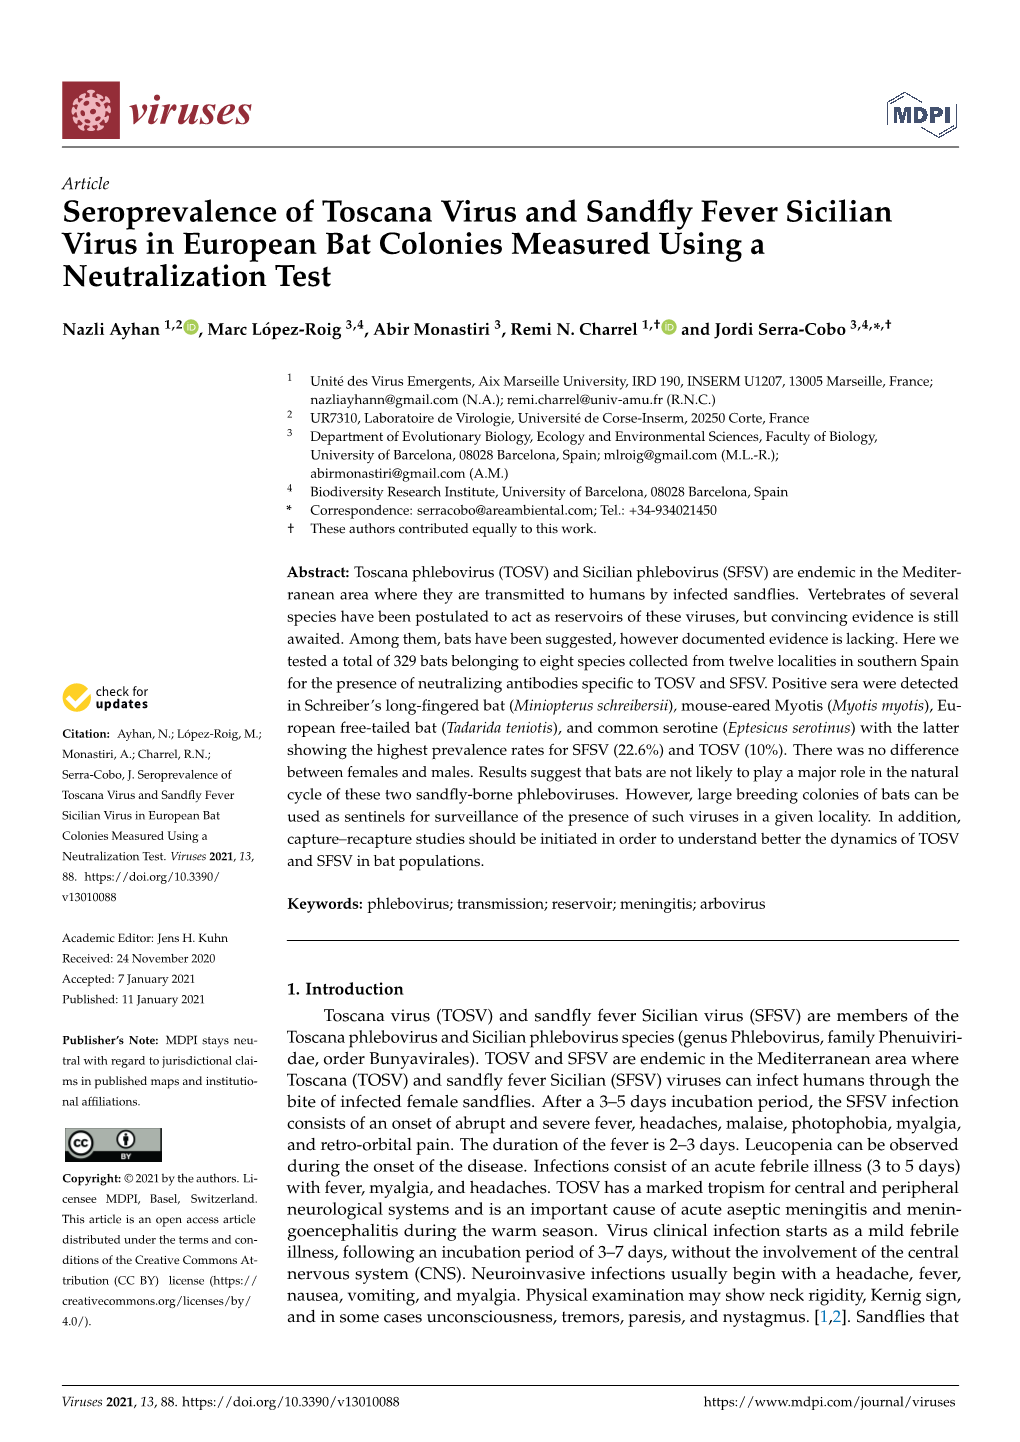 Seroprevalence of Toscana Virus and Sandfly Fever Sicilian Virus in European Bat Colonies Measured Using a Neutralization Test